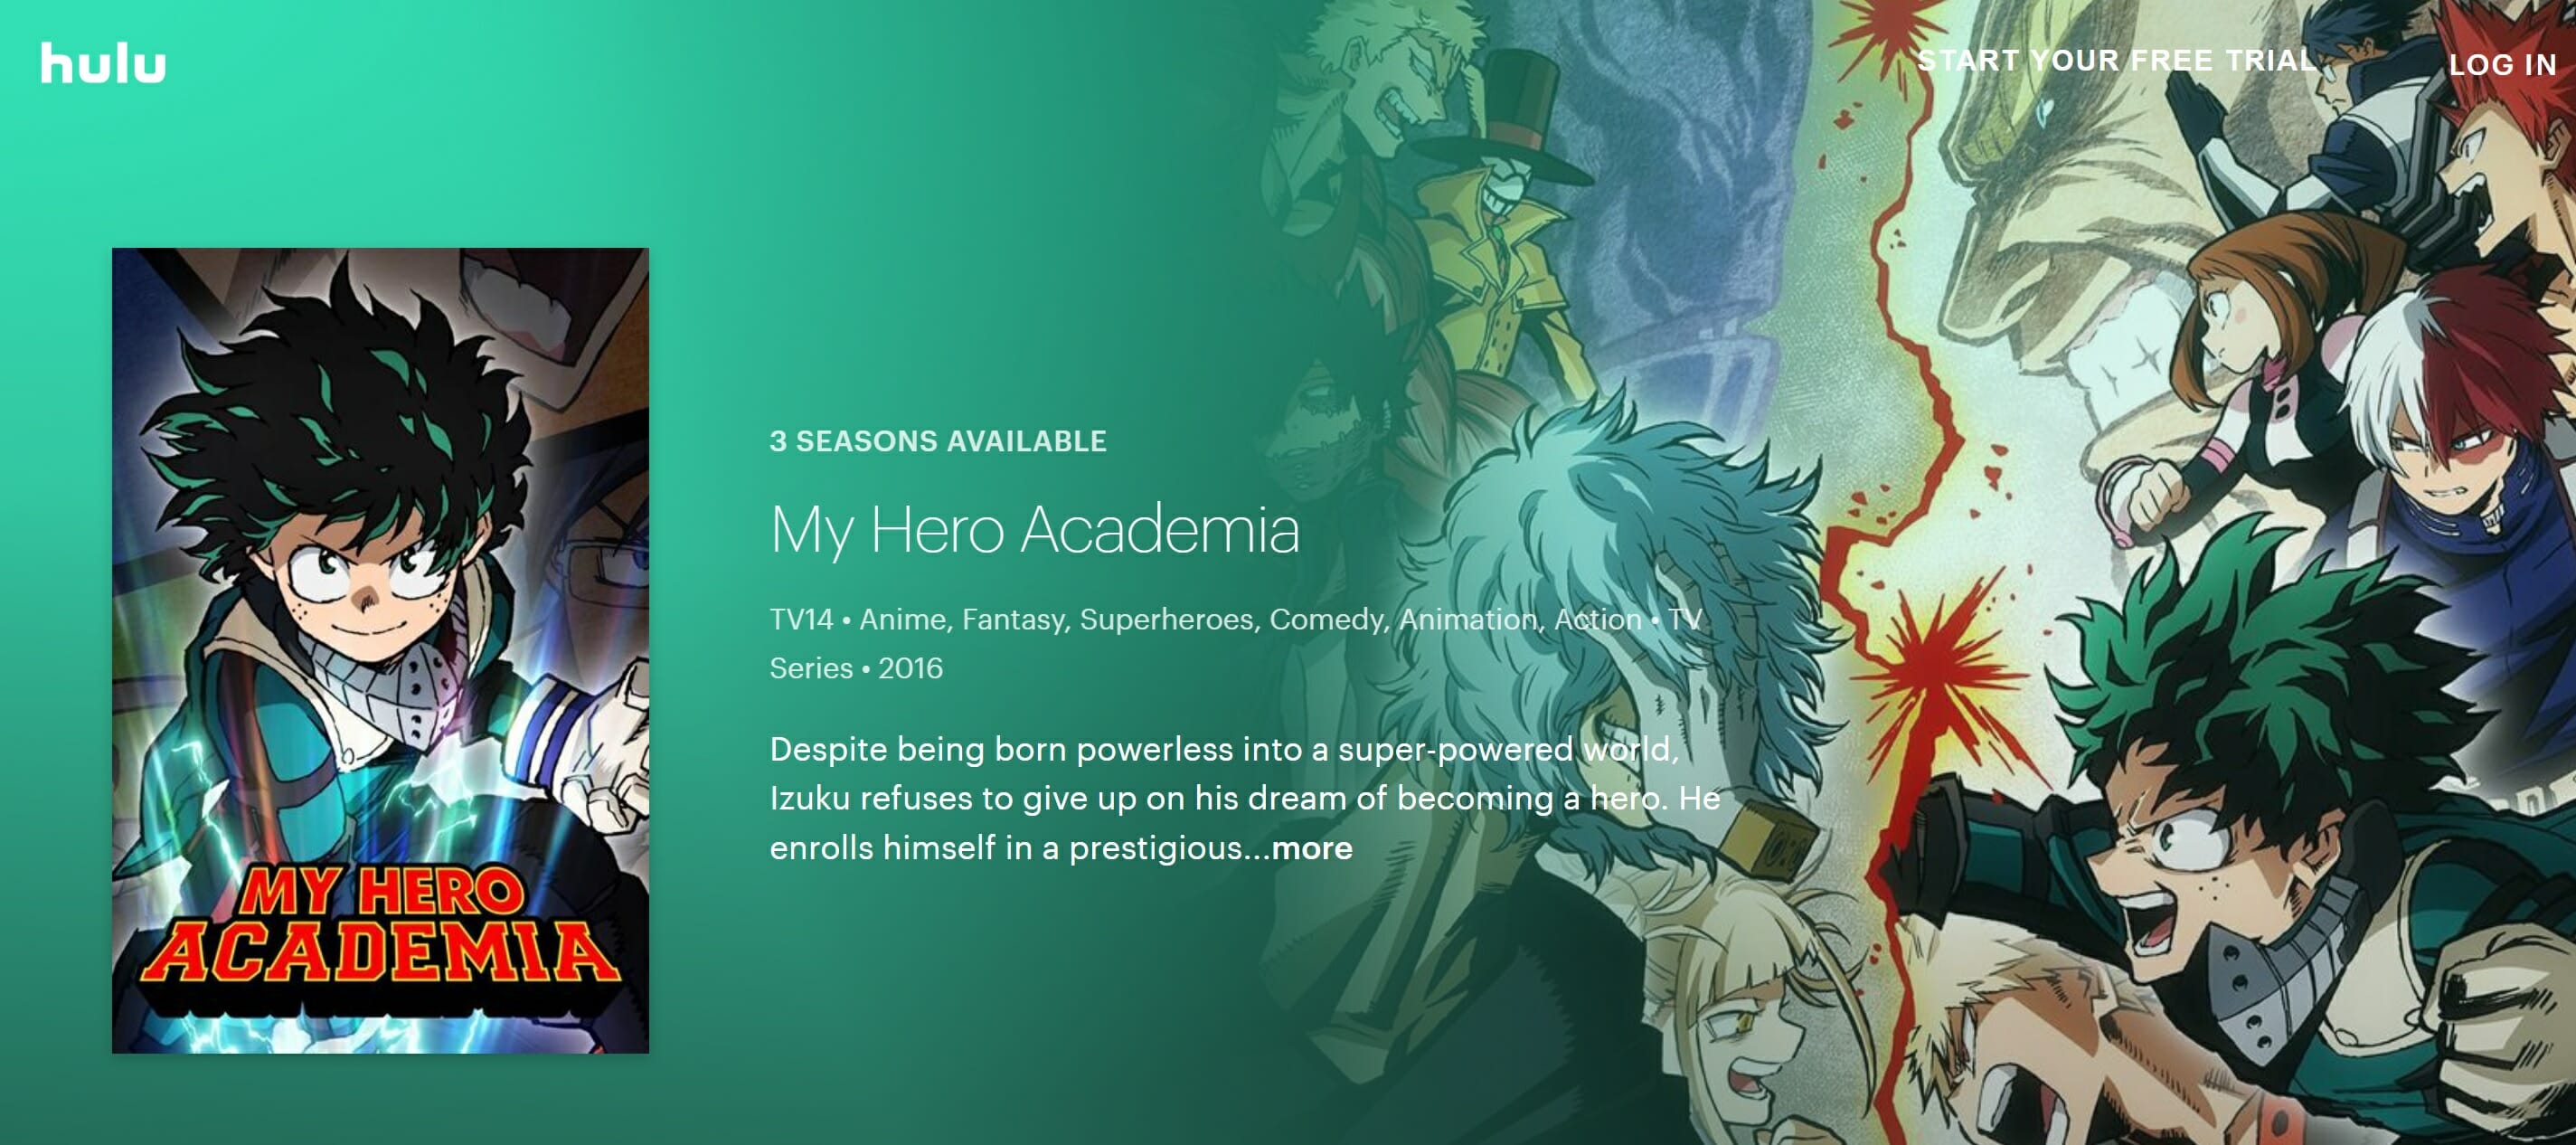 my hero academia season 2 dub hulu release date 2018